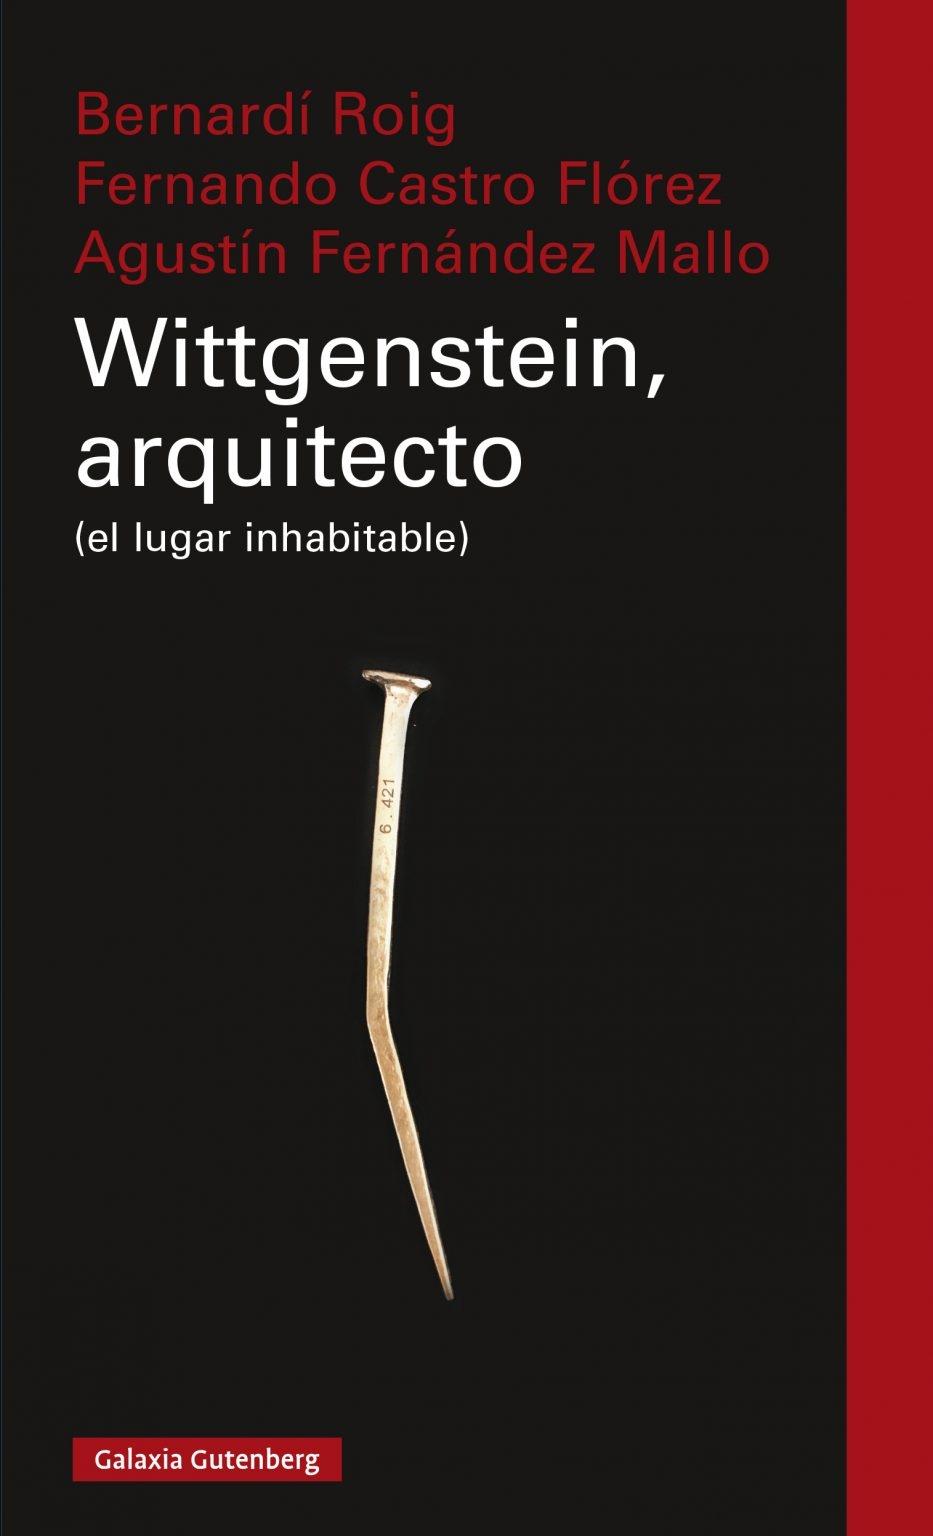 Wittgenstein, arquitecto "(El lugar inhabitable)". 